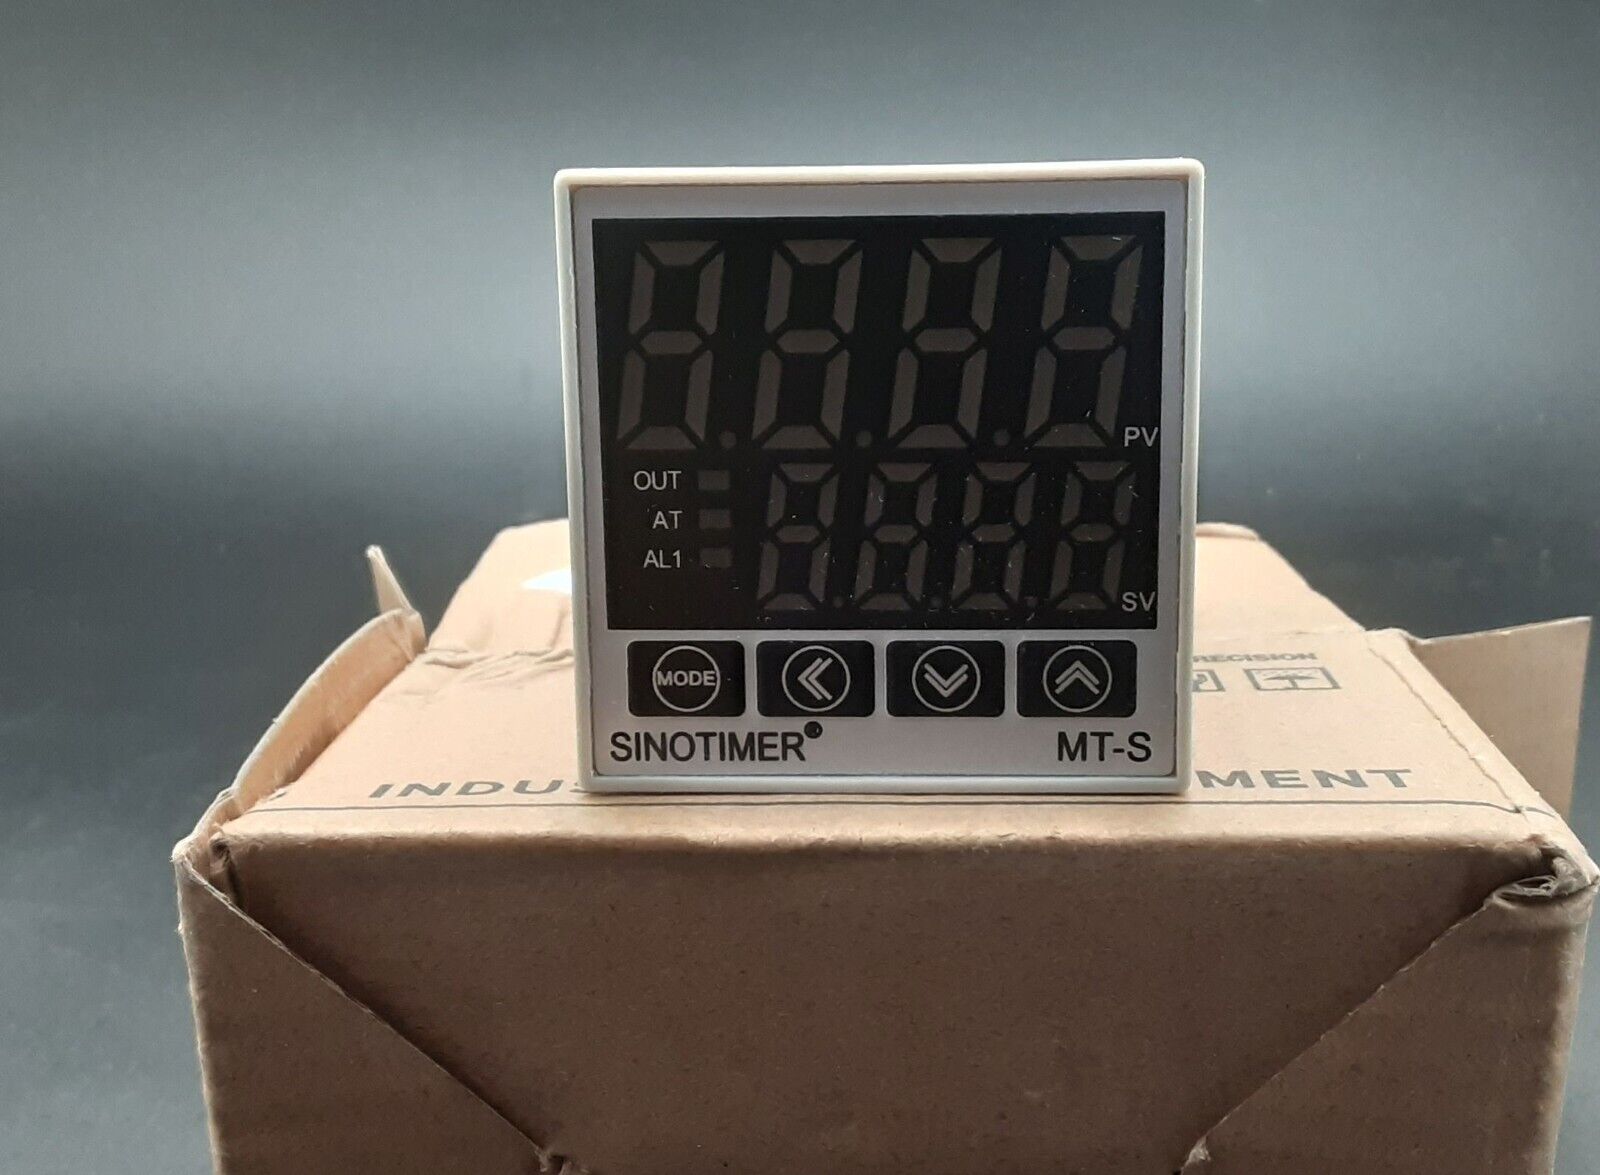 Sinotimer Household Digital Thermostat Pid Temperature Controller, Model MT-S.